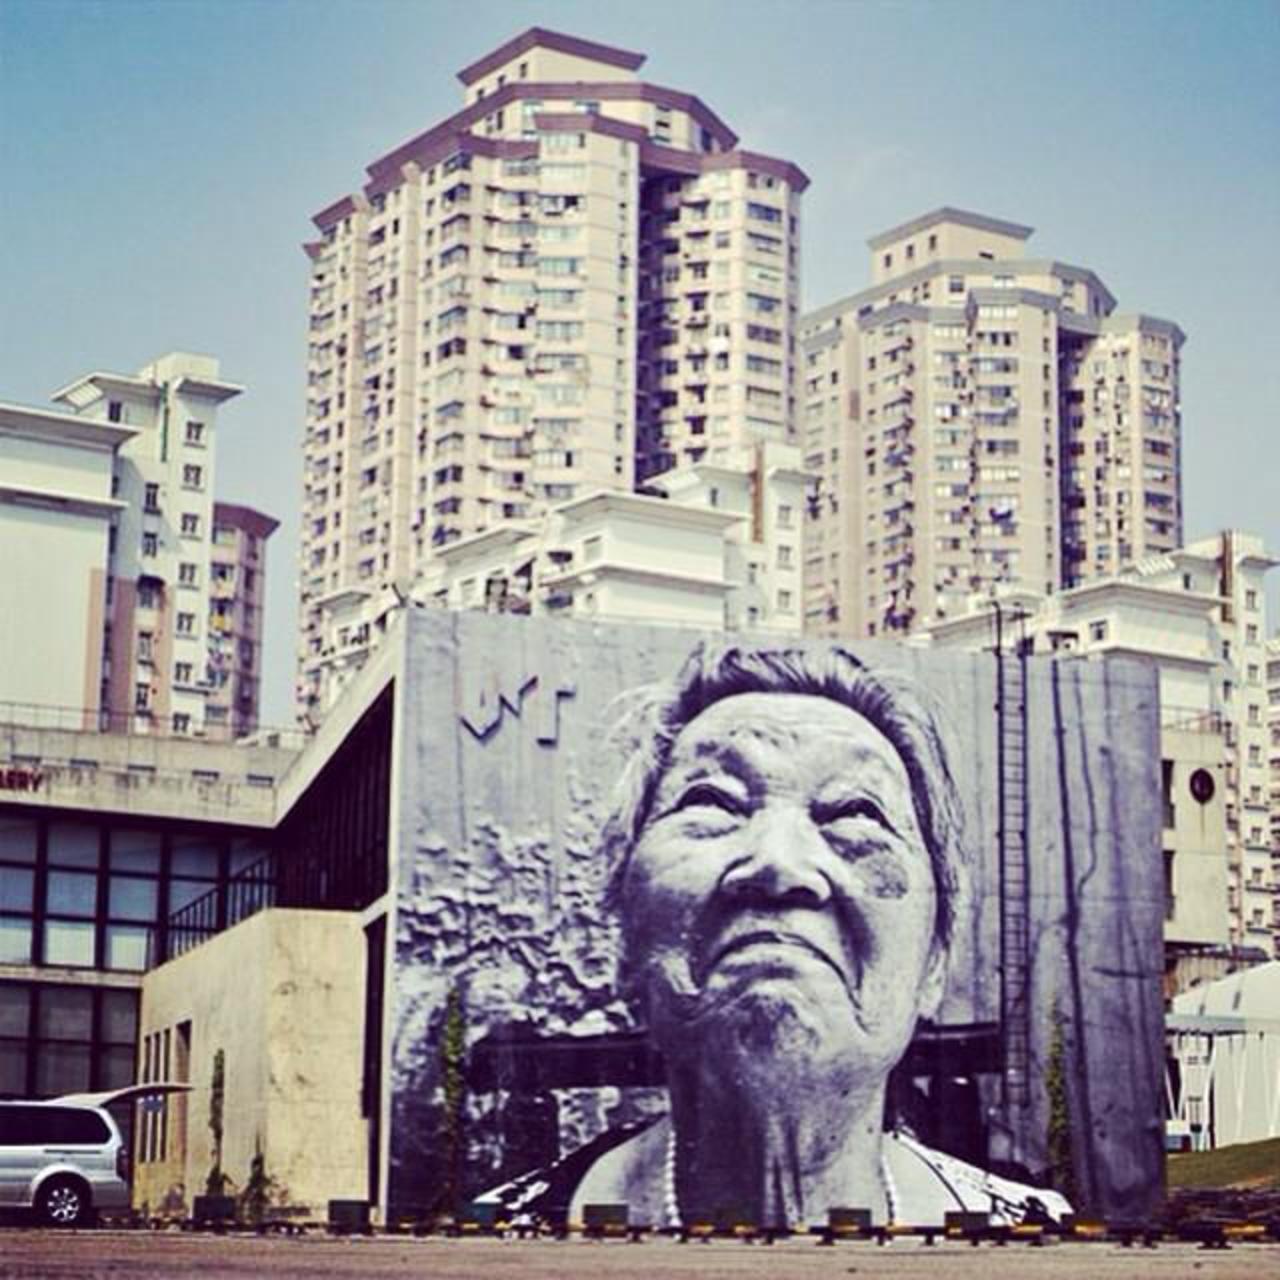 #stencil #sprayart #streetart #graffiti #urbanart #mural #murales http://t.co/4uVzSLnnEO